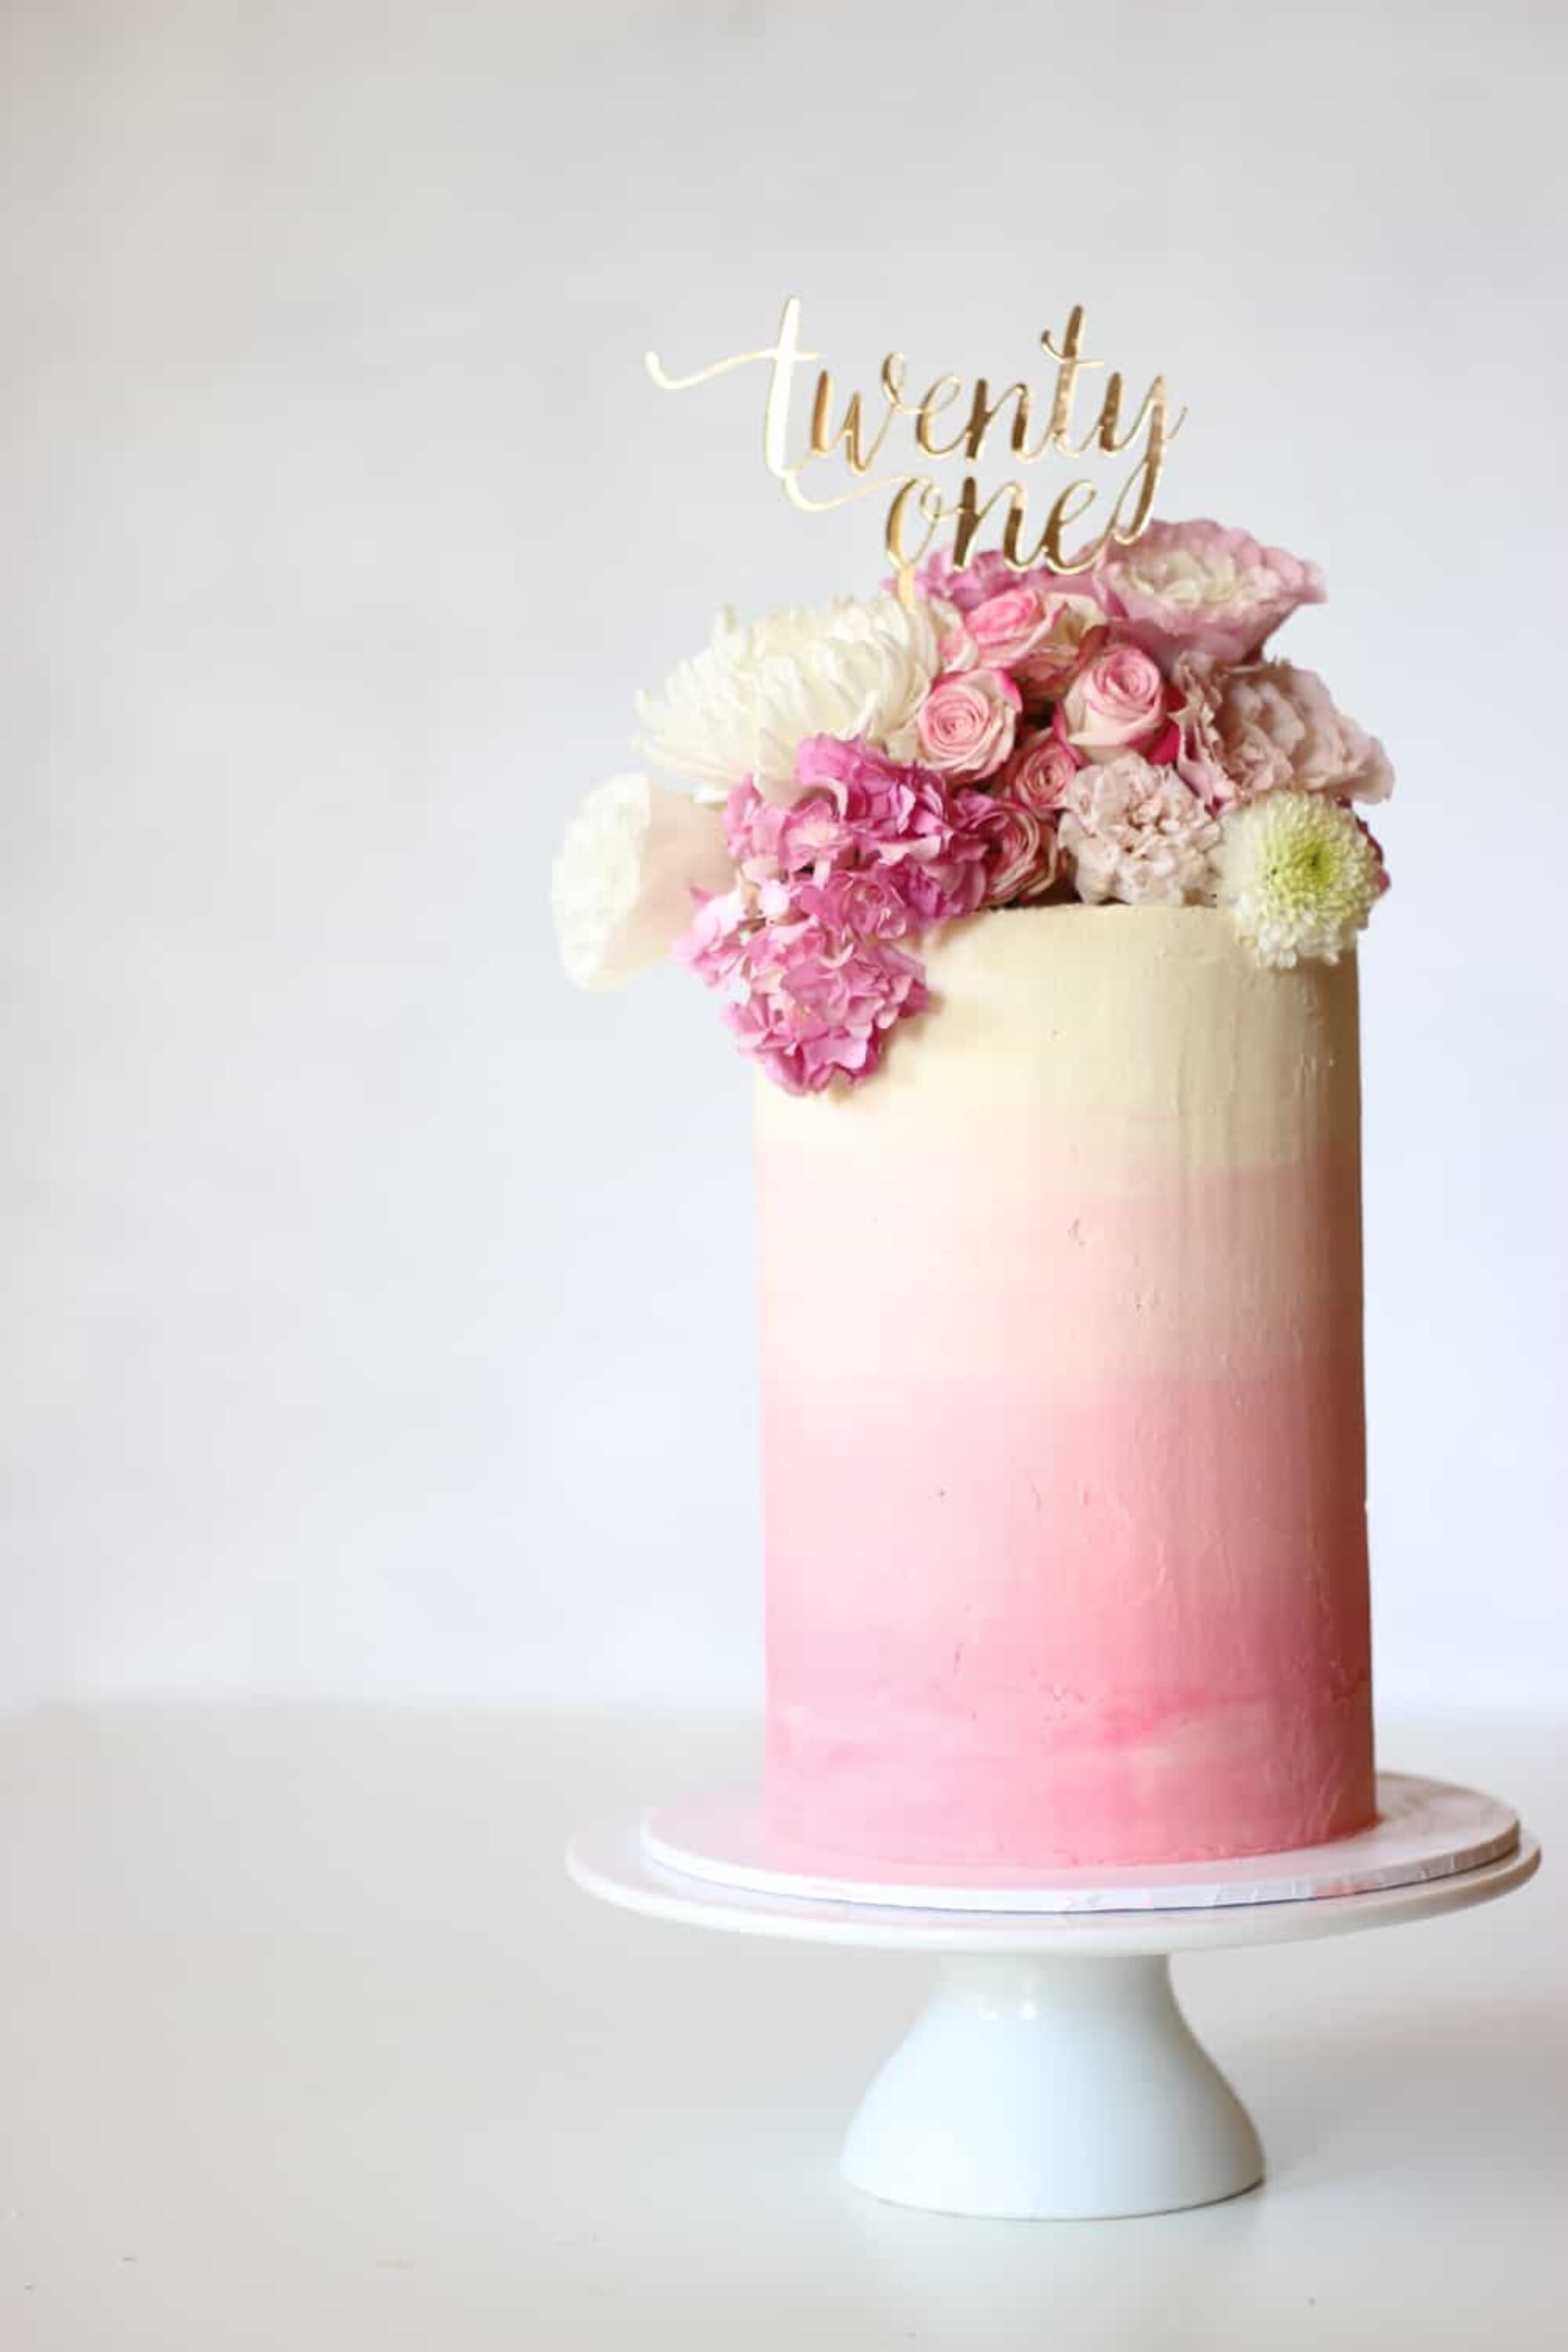 SUKAR - creative wedding cakes and desserts, Perth WA ...